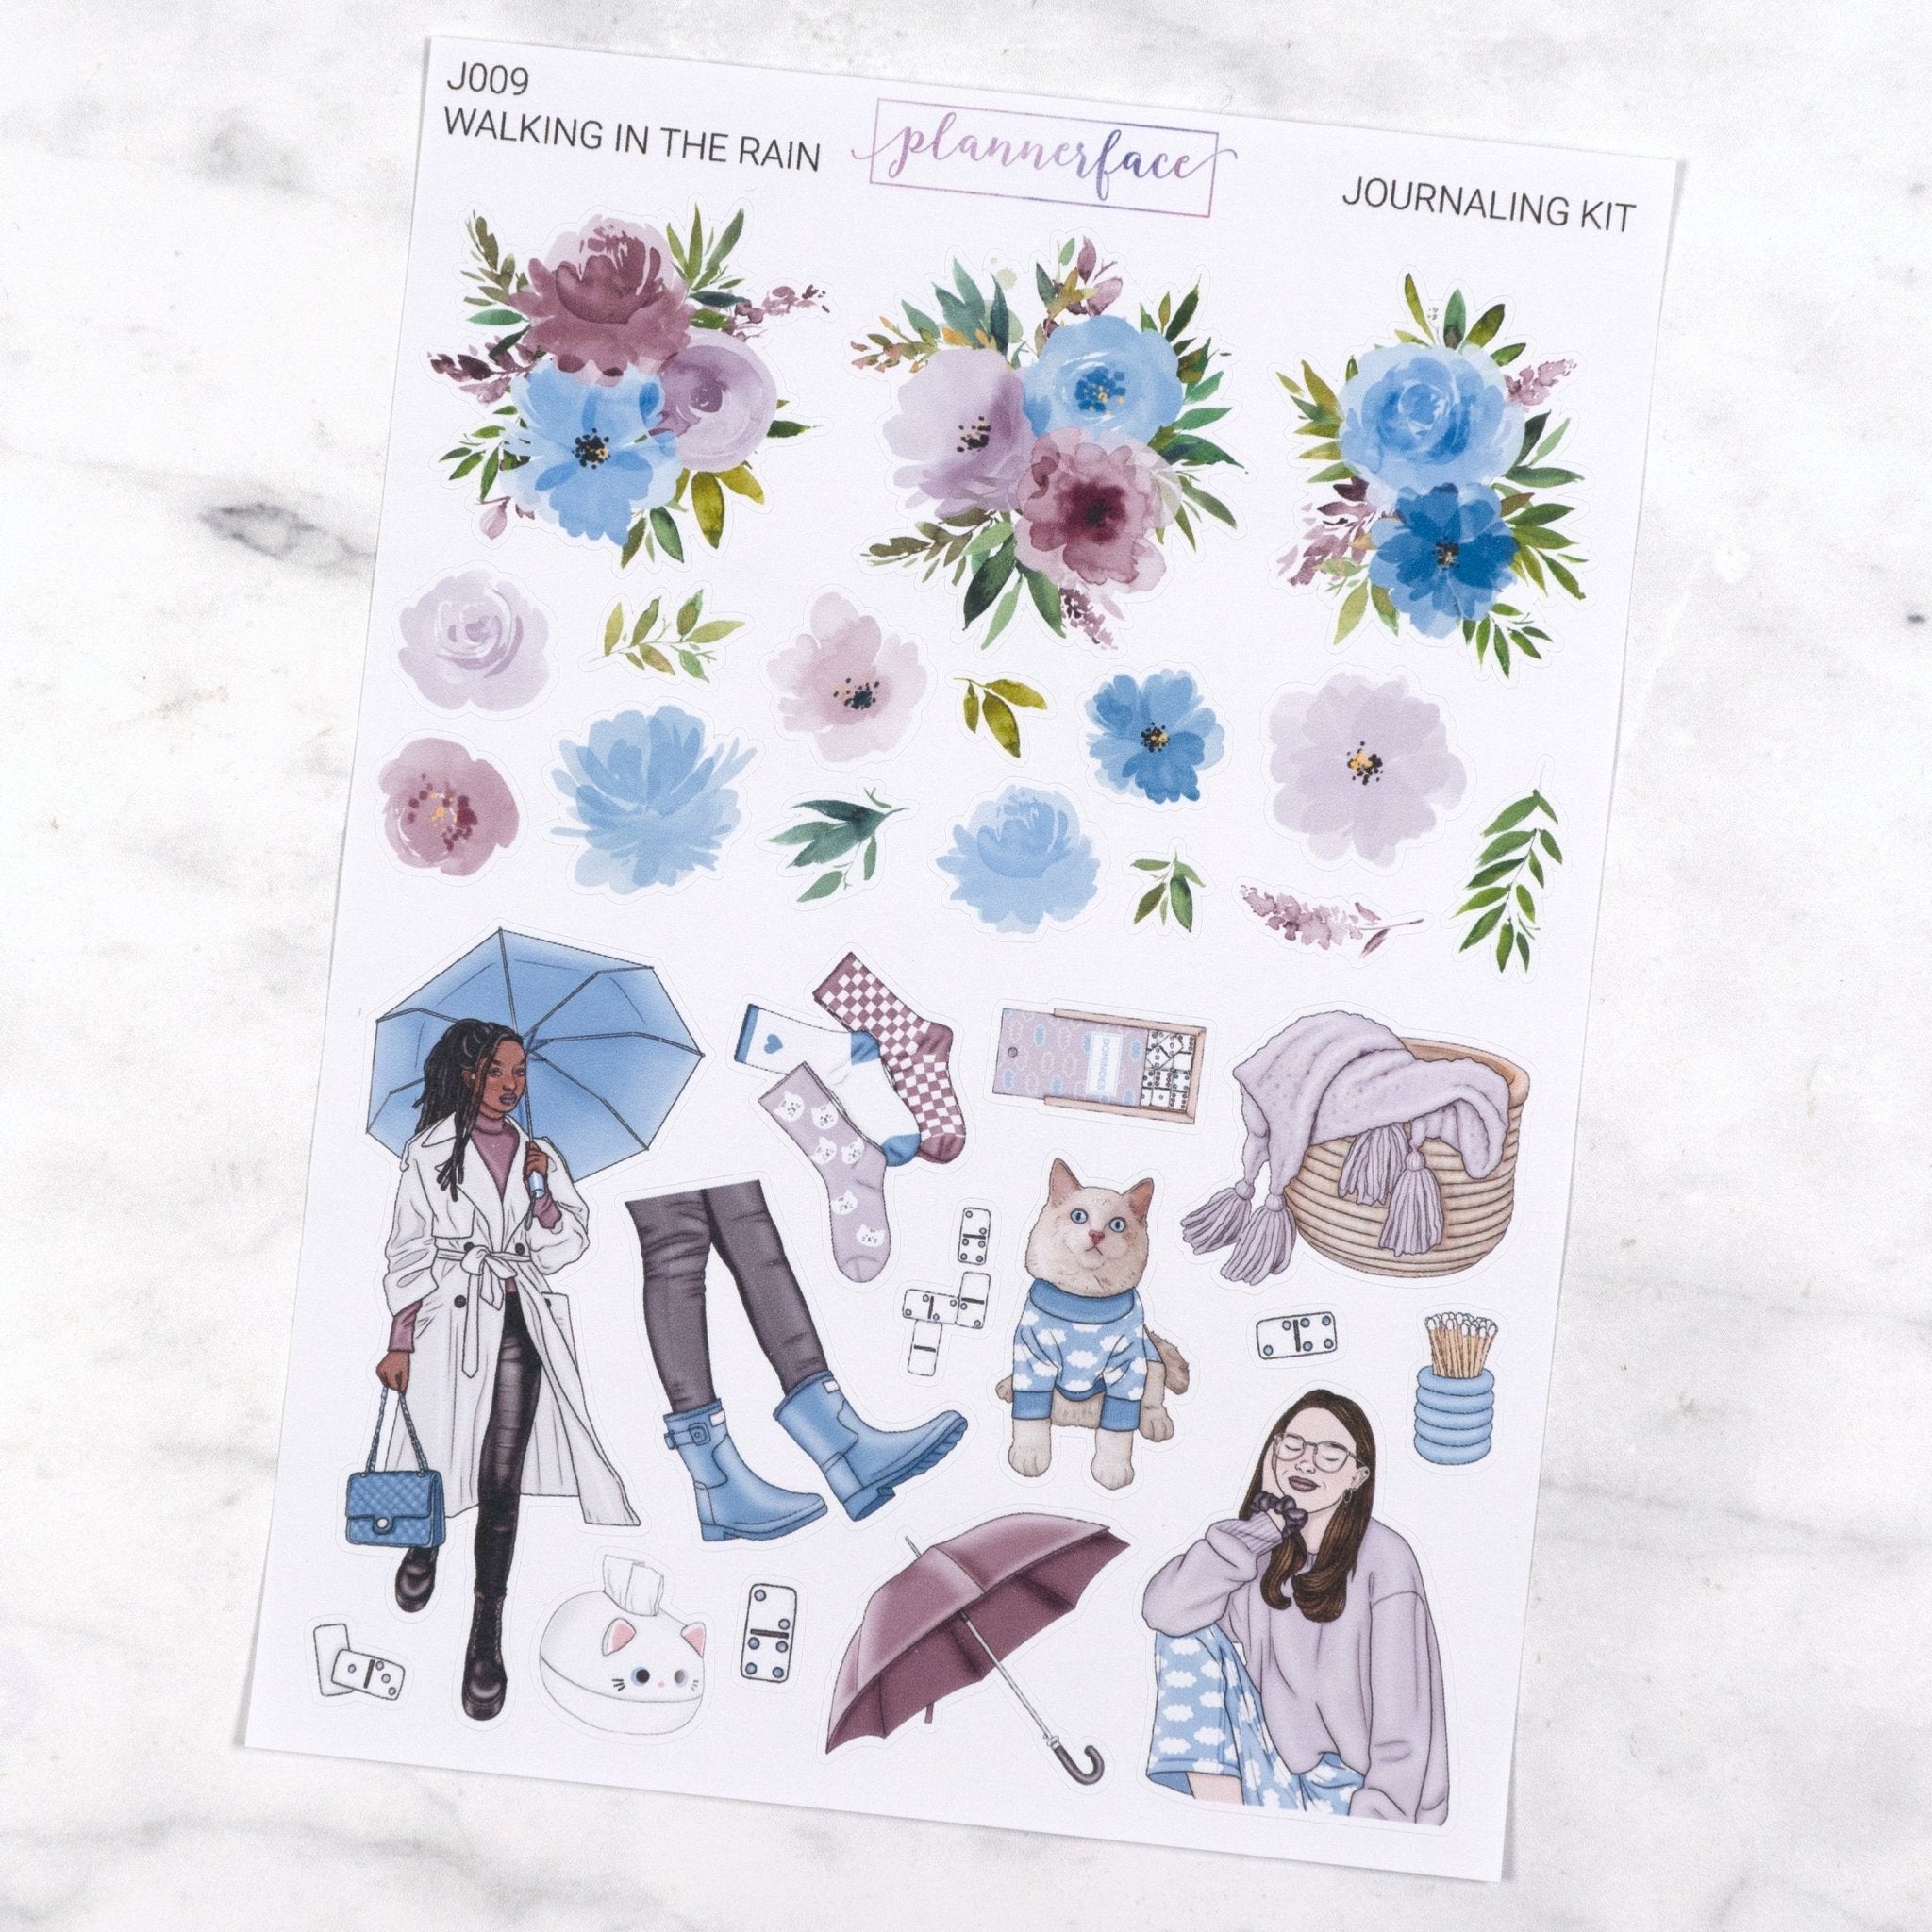 Walking in the Rain | Journaling Kit by Plannerface